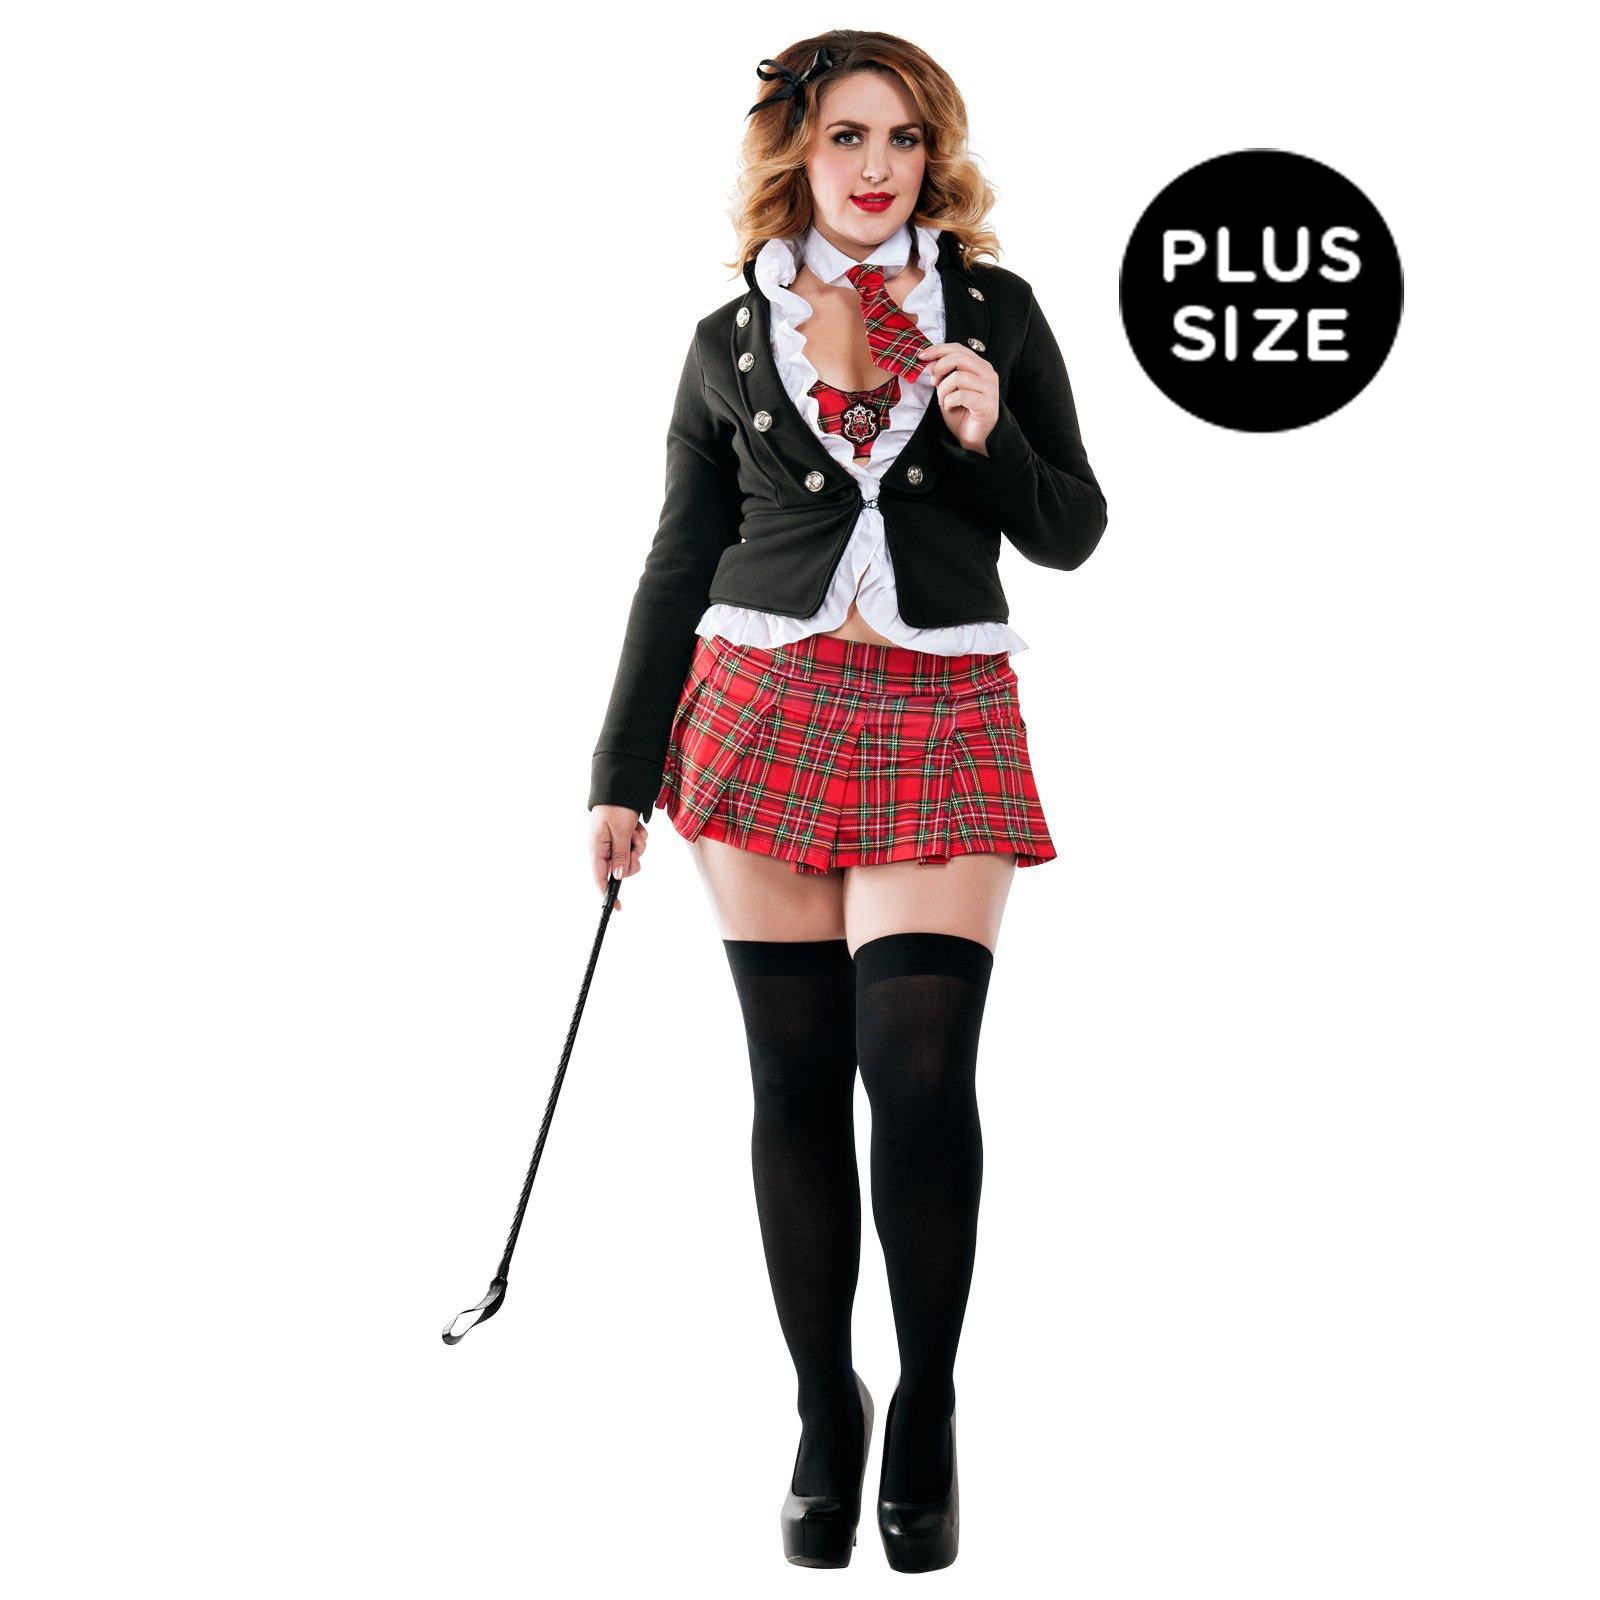 Uptown School Girl Costume for Plus Size Women